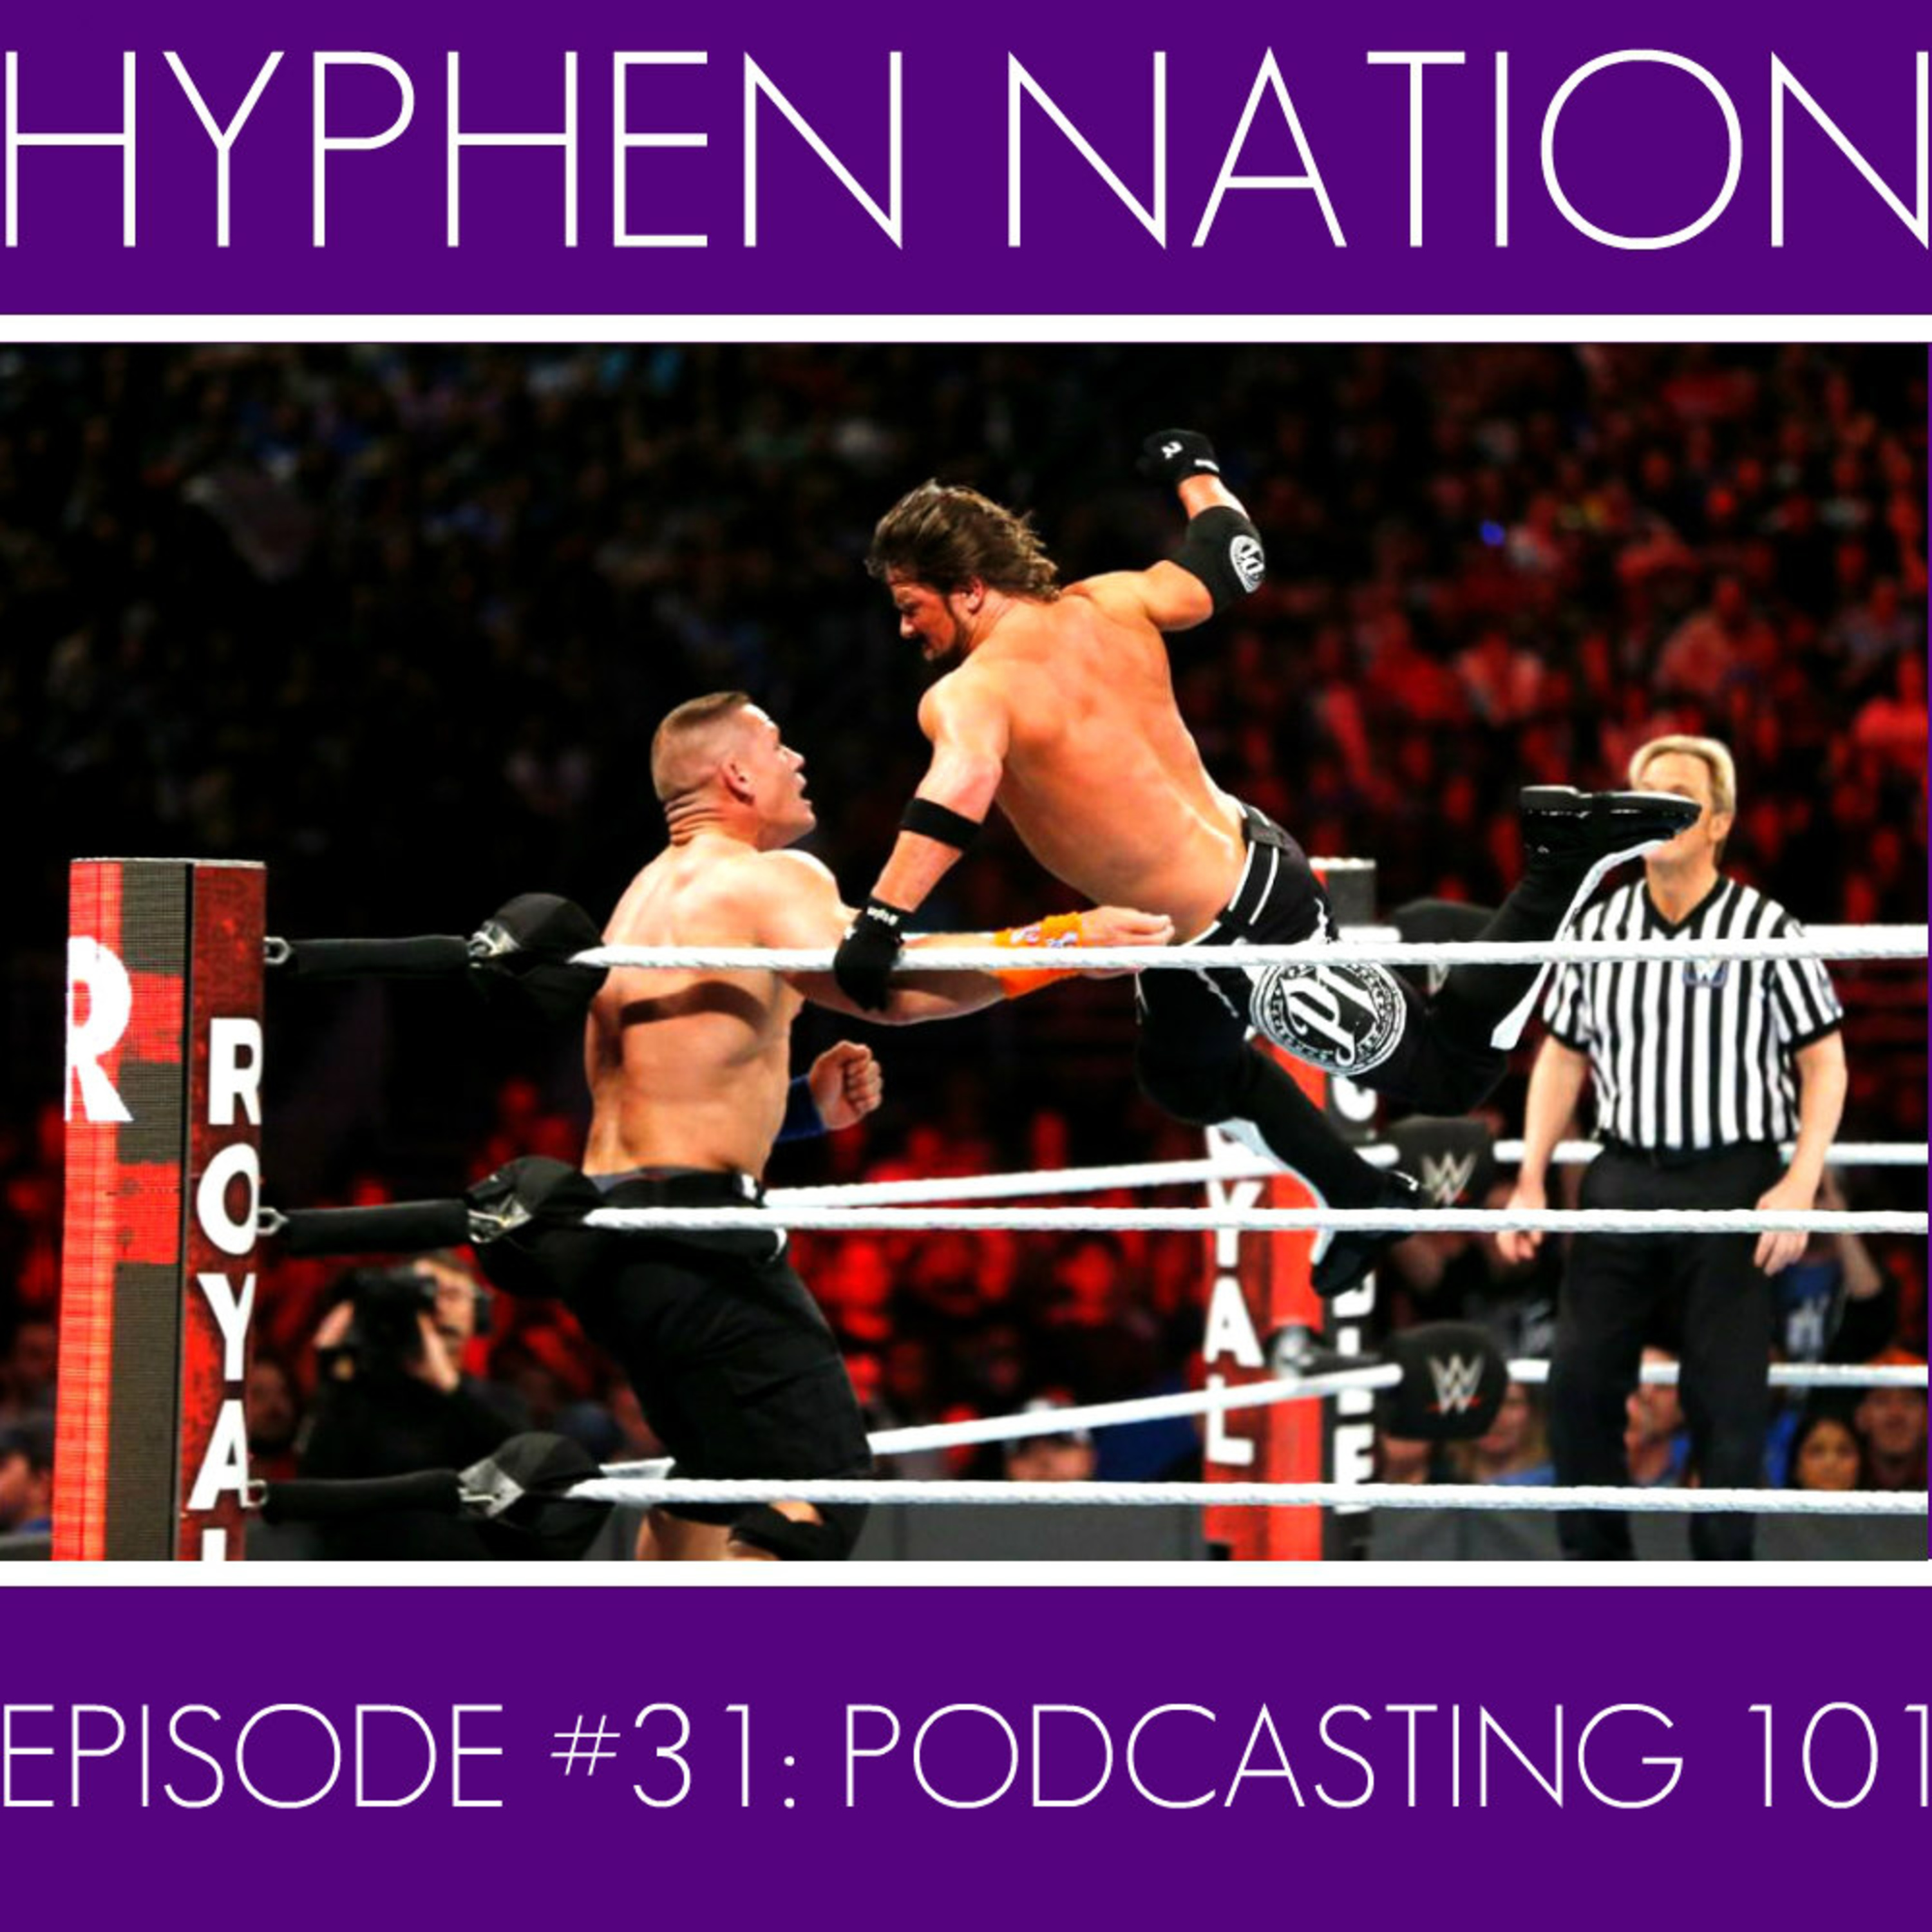 Episode #31: Podcasting 101